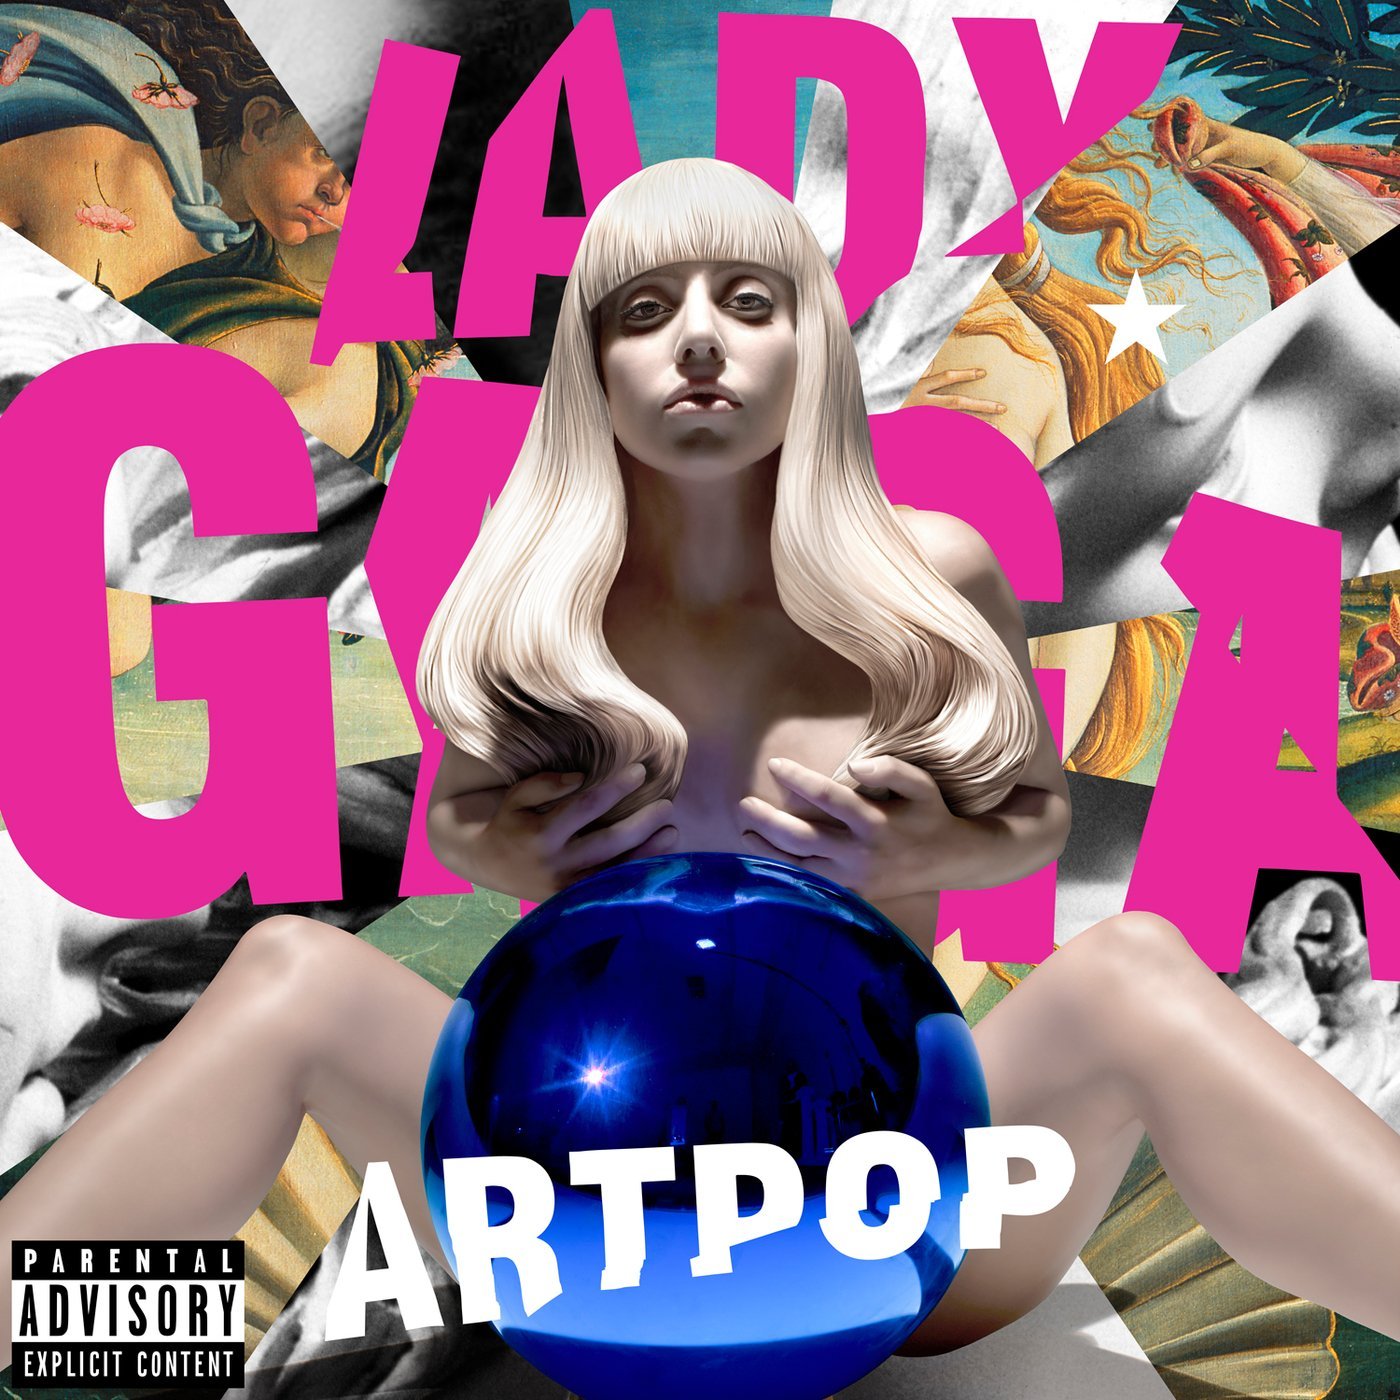 boom music reviews - Artpop by Lady Gaga